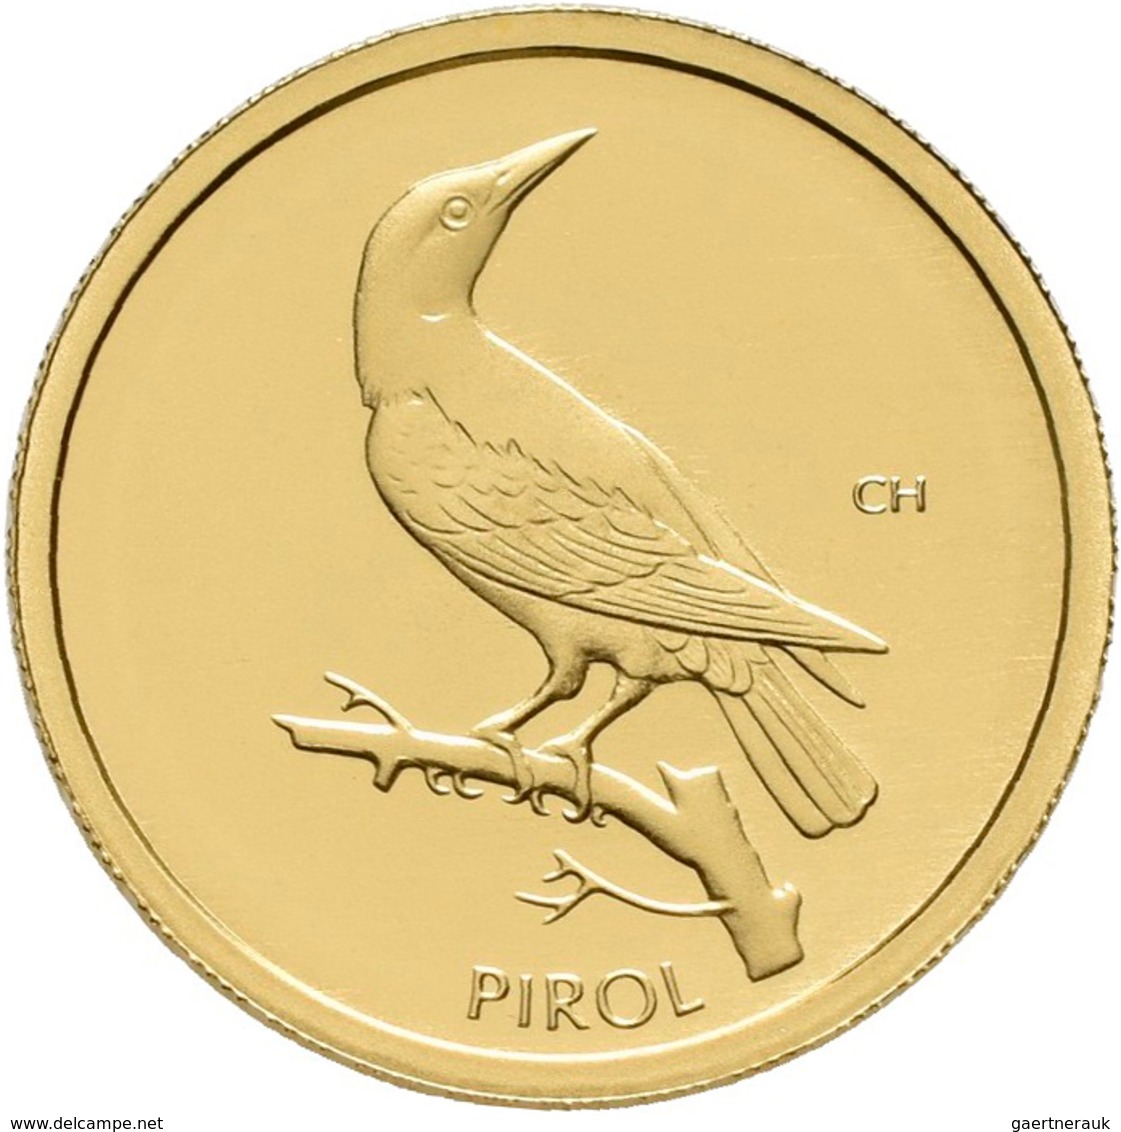 Deutschland - Anlagegold: 5 X 20 Euro 2017 Pirol (A,D,F,G,G), Serie Heimische Vögel. In Original Kap - Duitsland